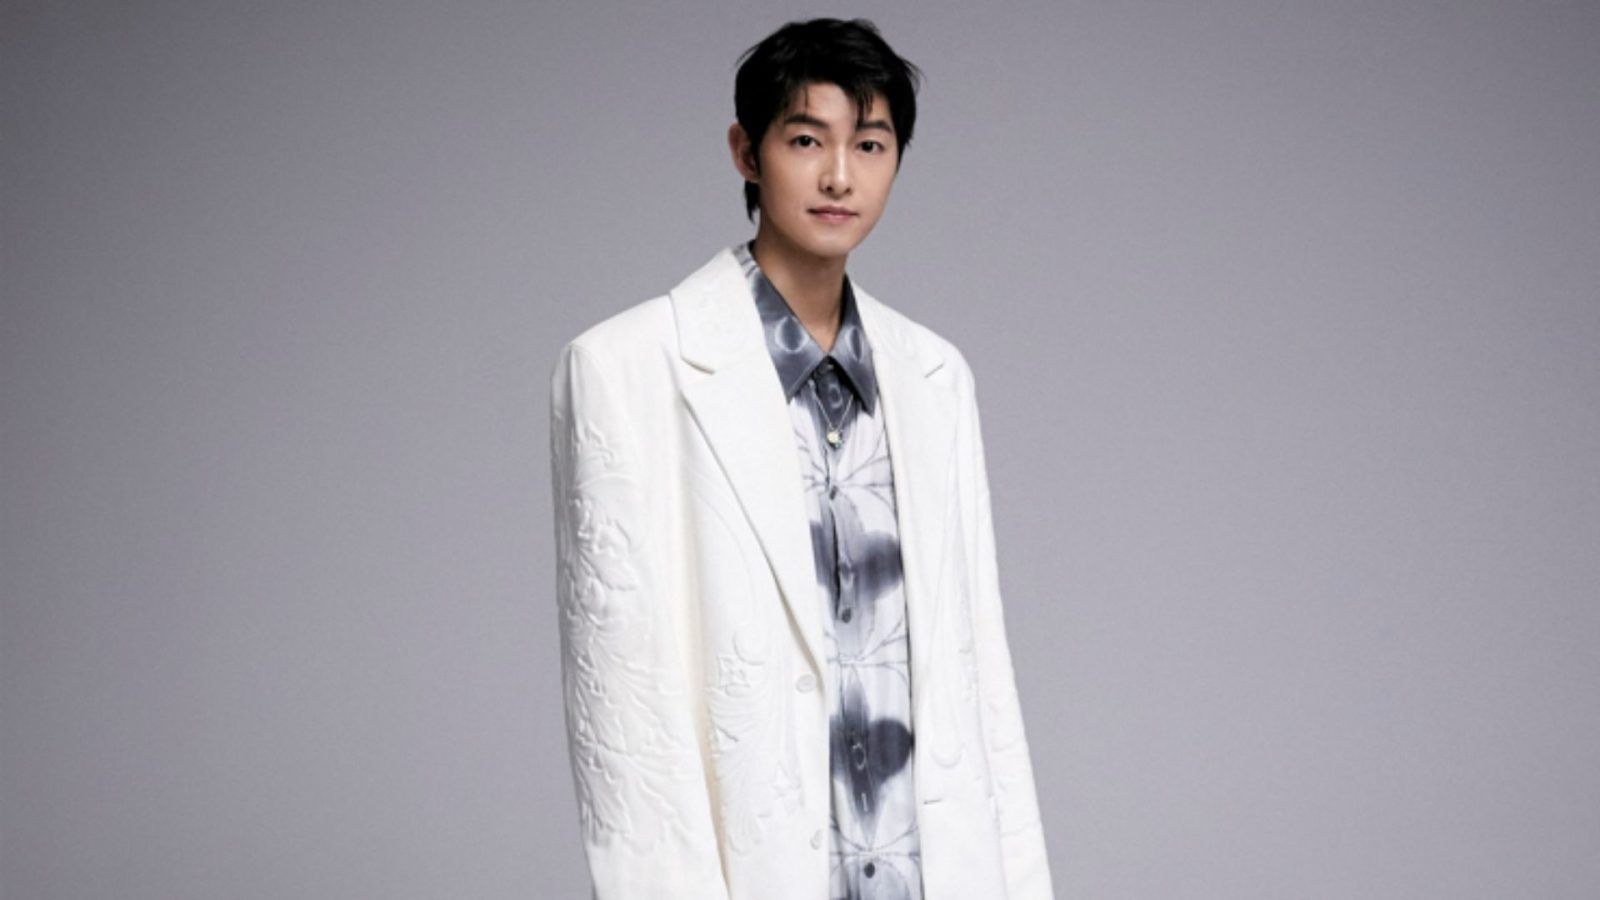 Louis Vuitton names Song Joong-ki its newest house ambassador